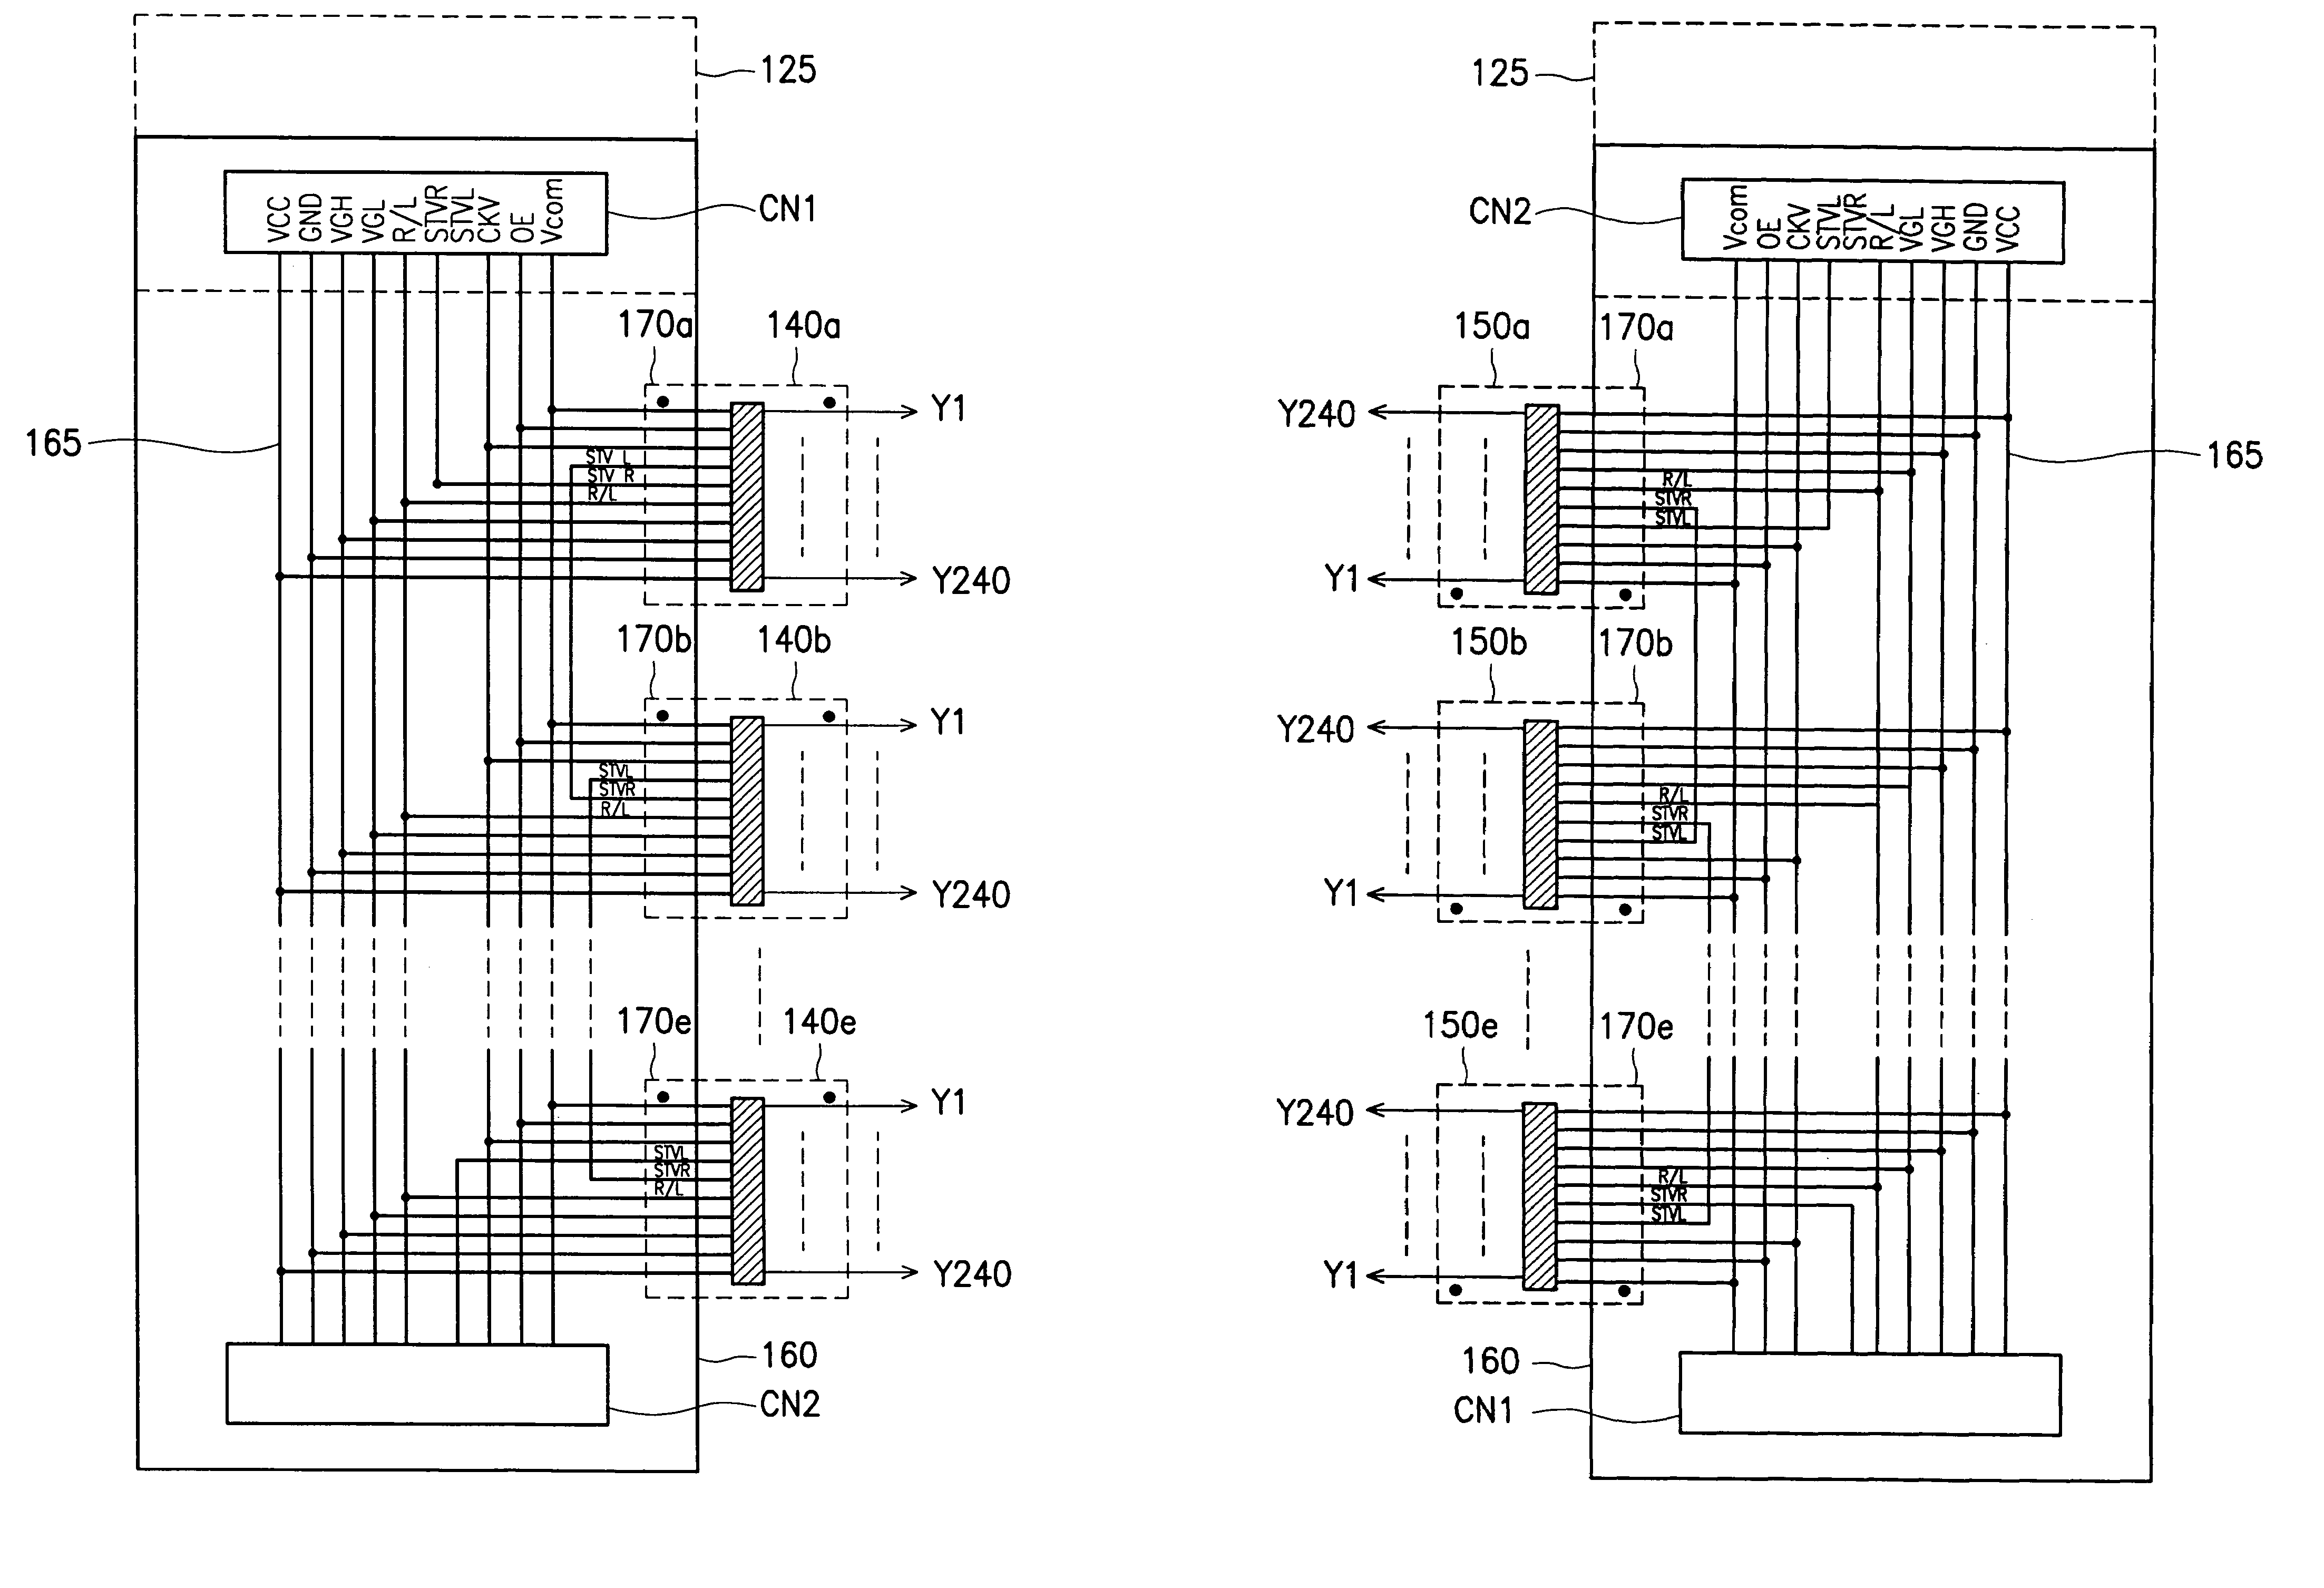 Liquid crystal display module and its scanning circuit board